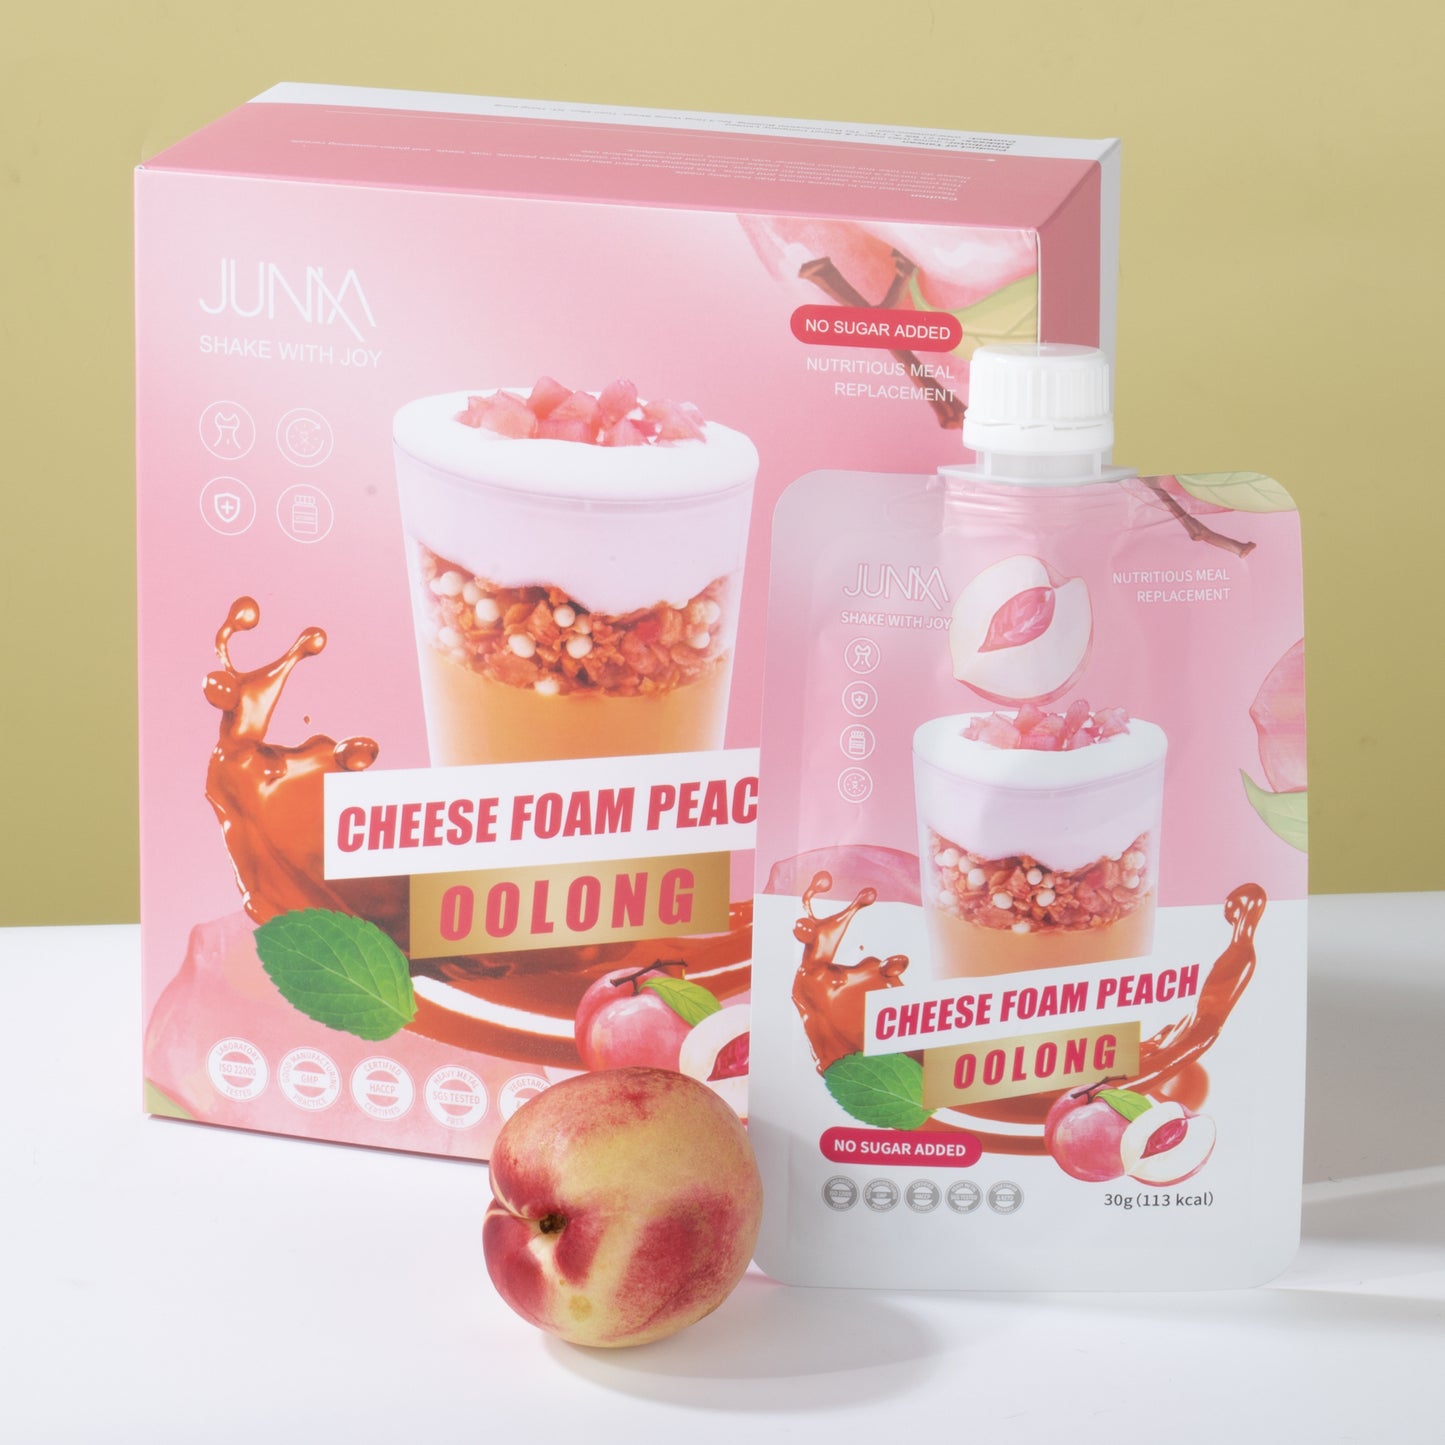 JUMIA Nutritious Meal Replacement Milkshake - Cheese Foam Peach Oolong